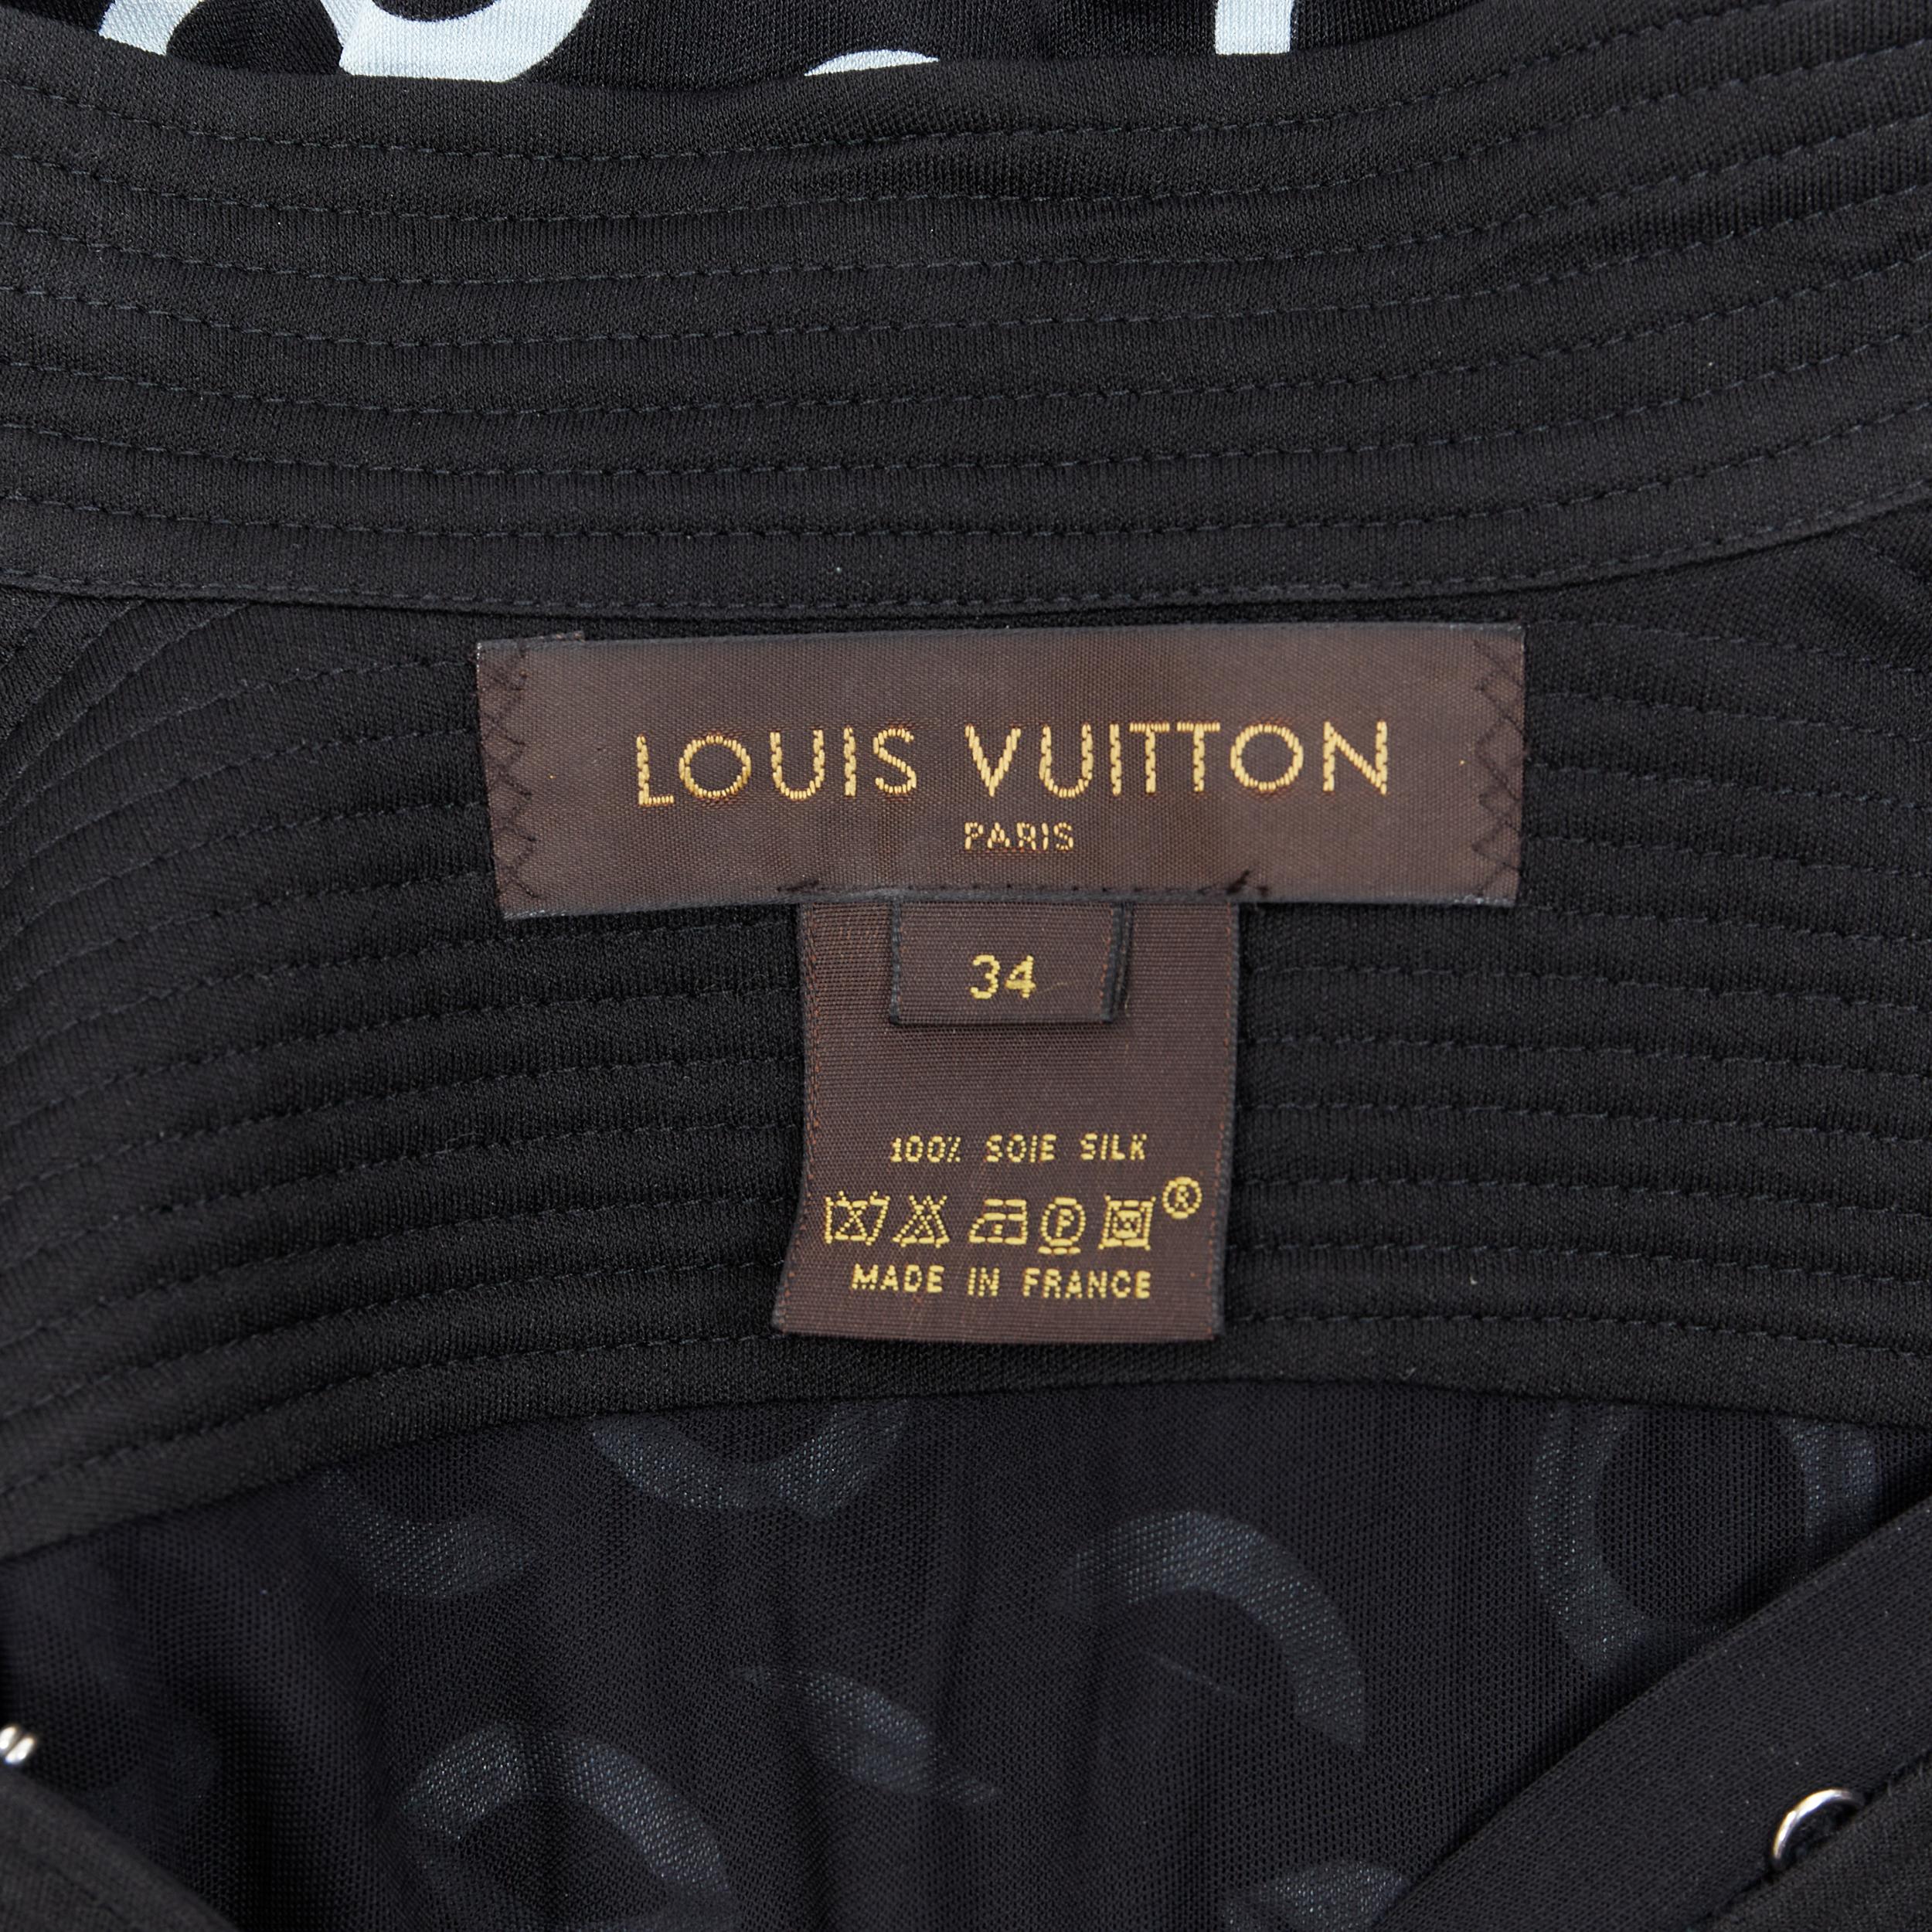 LOUIS VUITTON 100% silk black baby blue spot print belted cocktail dress FR34 S 5